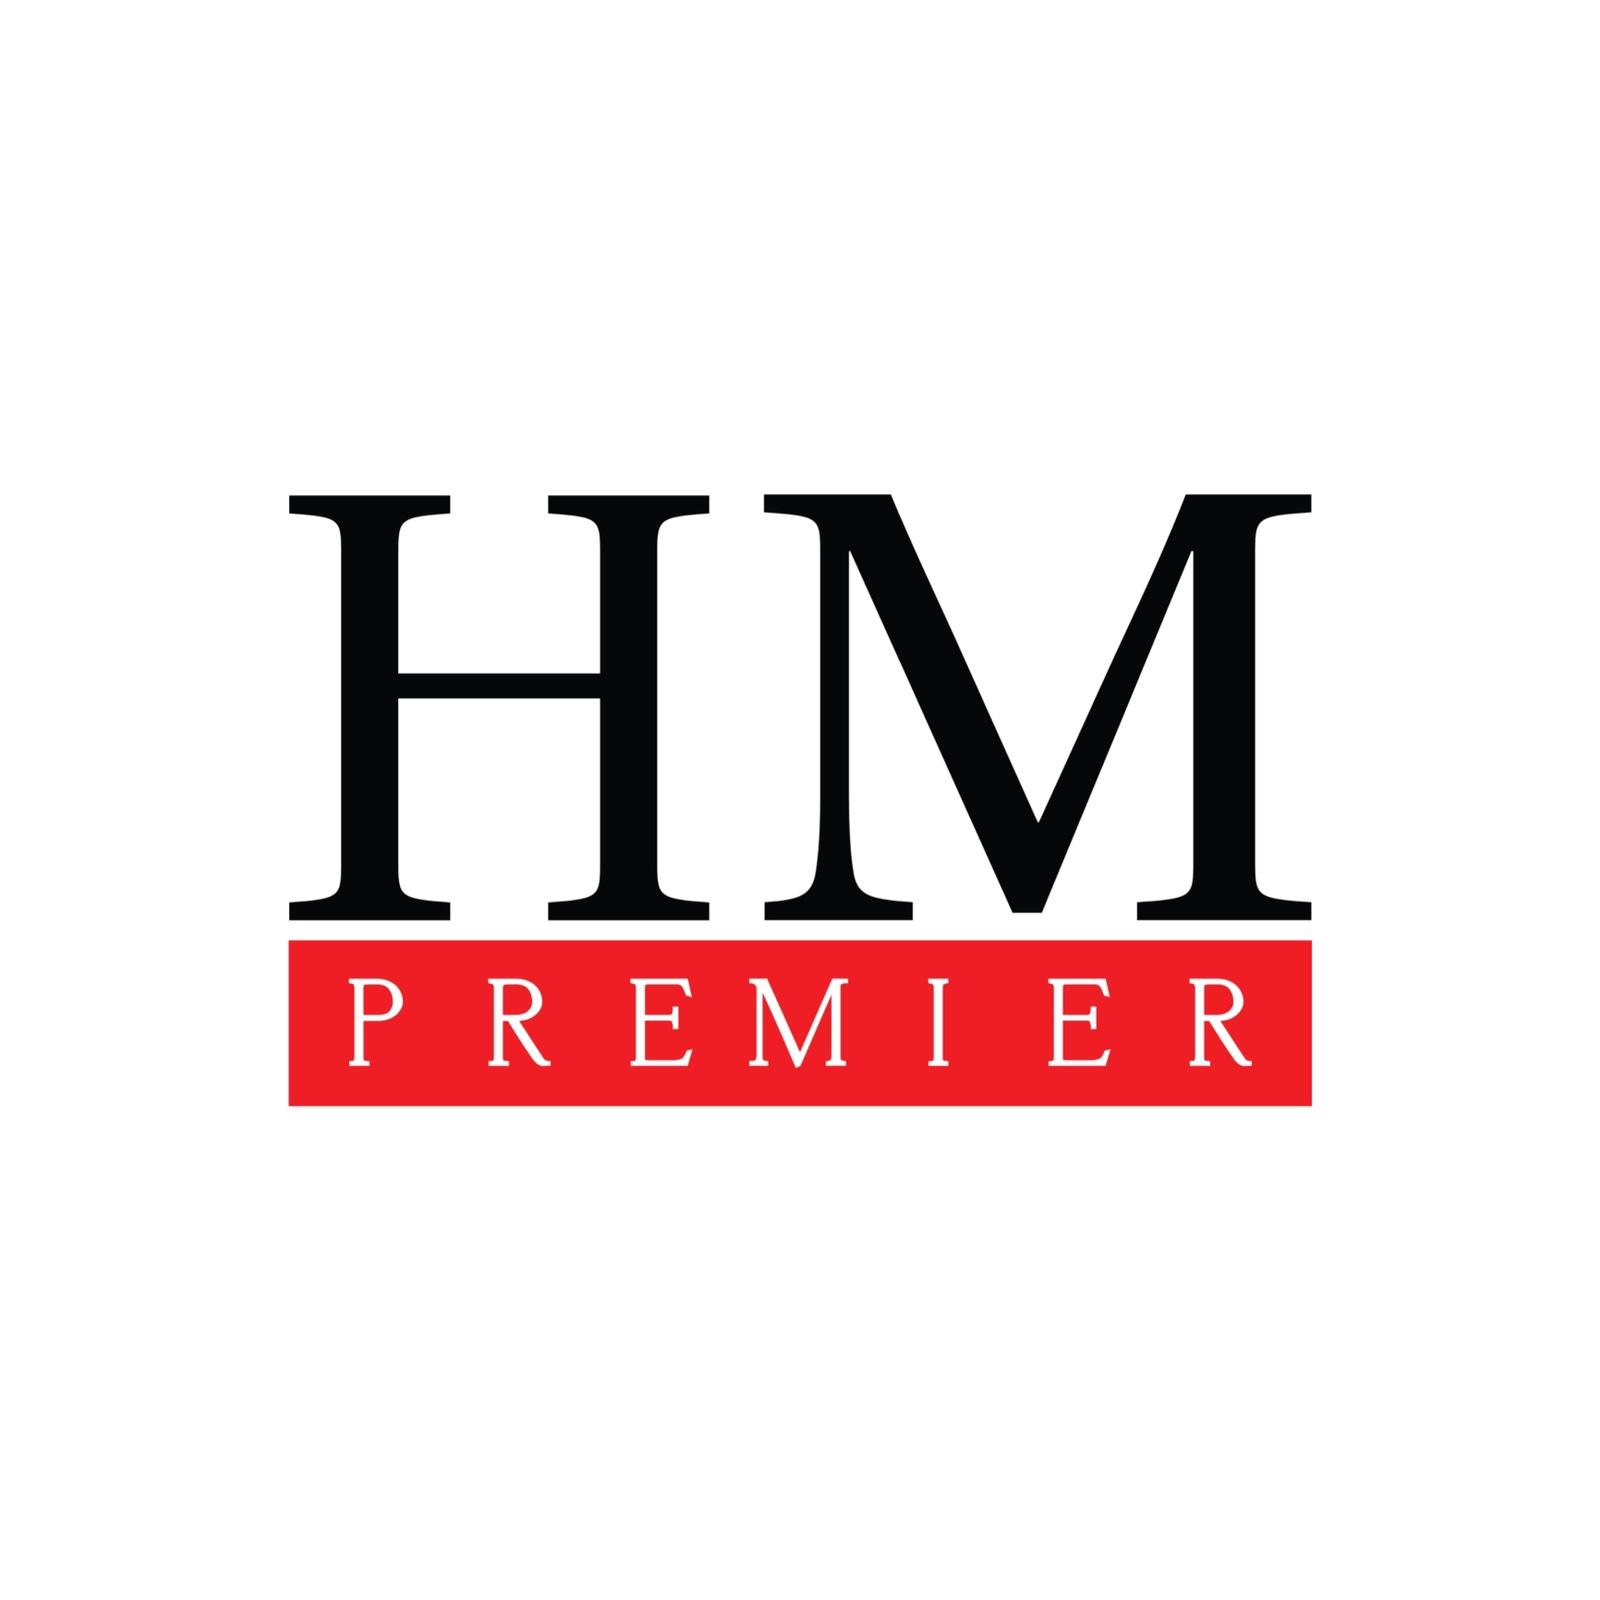 HM Premier Group of Companies